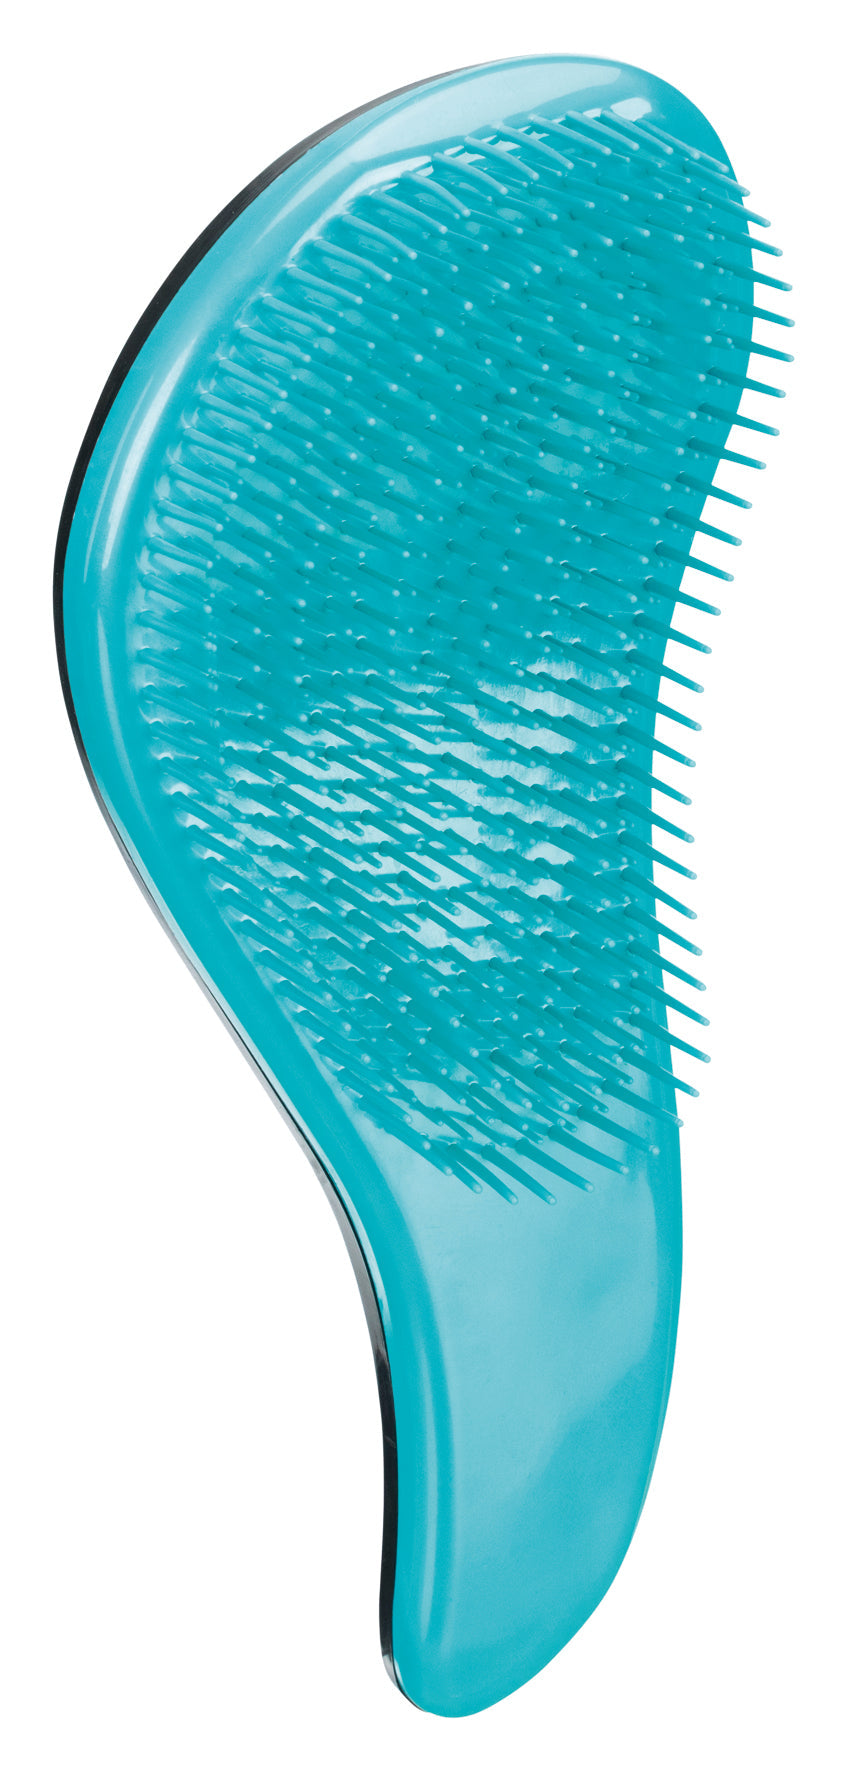 Trixie Soft Brush with Soft Platic Bristles, 19 cm - Petsgool Online